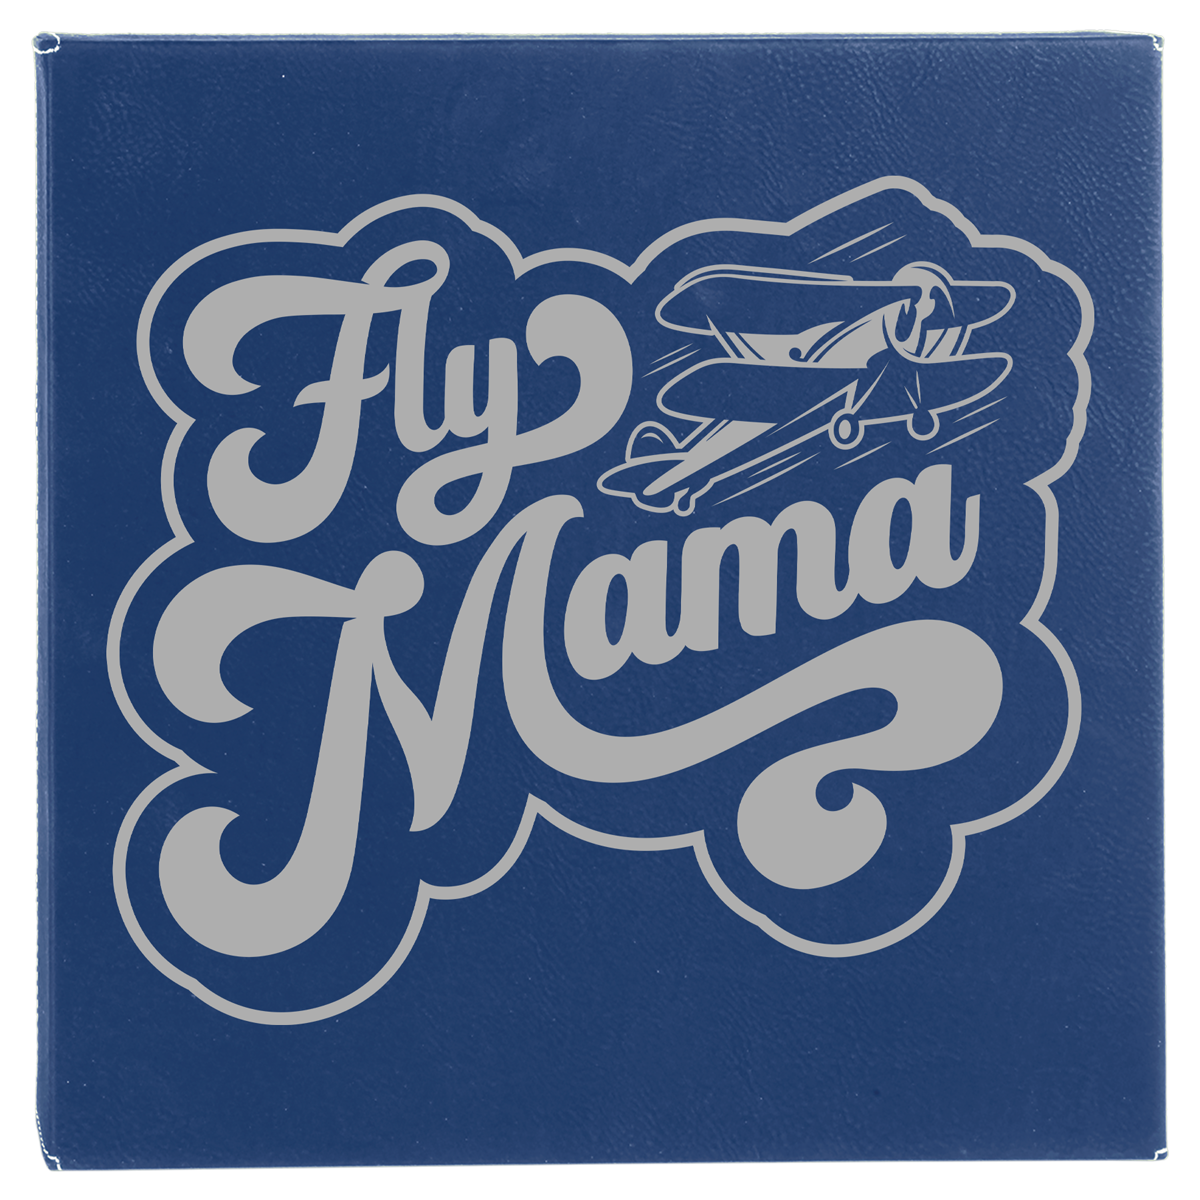 Fly Mama Wall Decor - 10x10 or 14x14